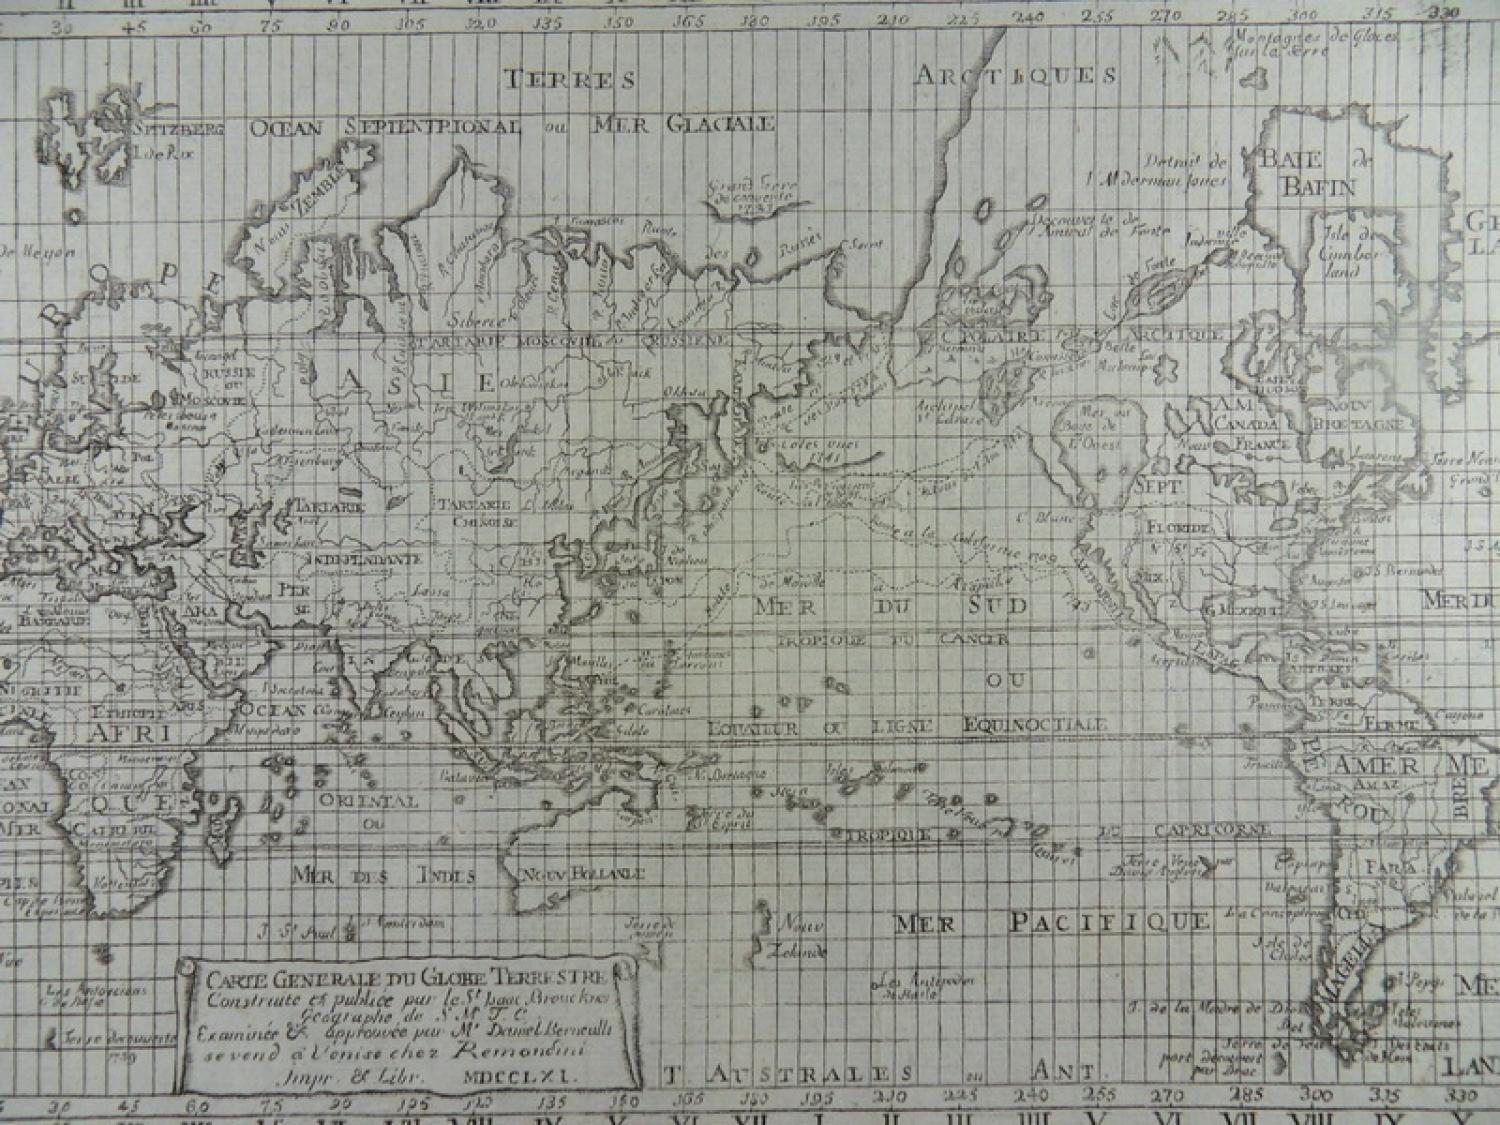 Remondini - Carte generale du globe terrestre